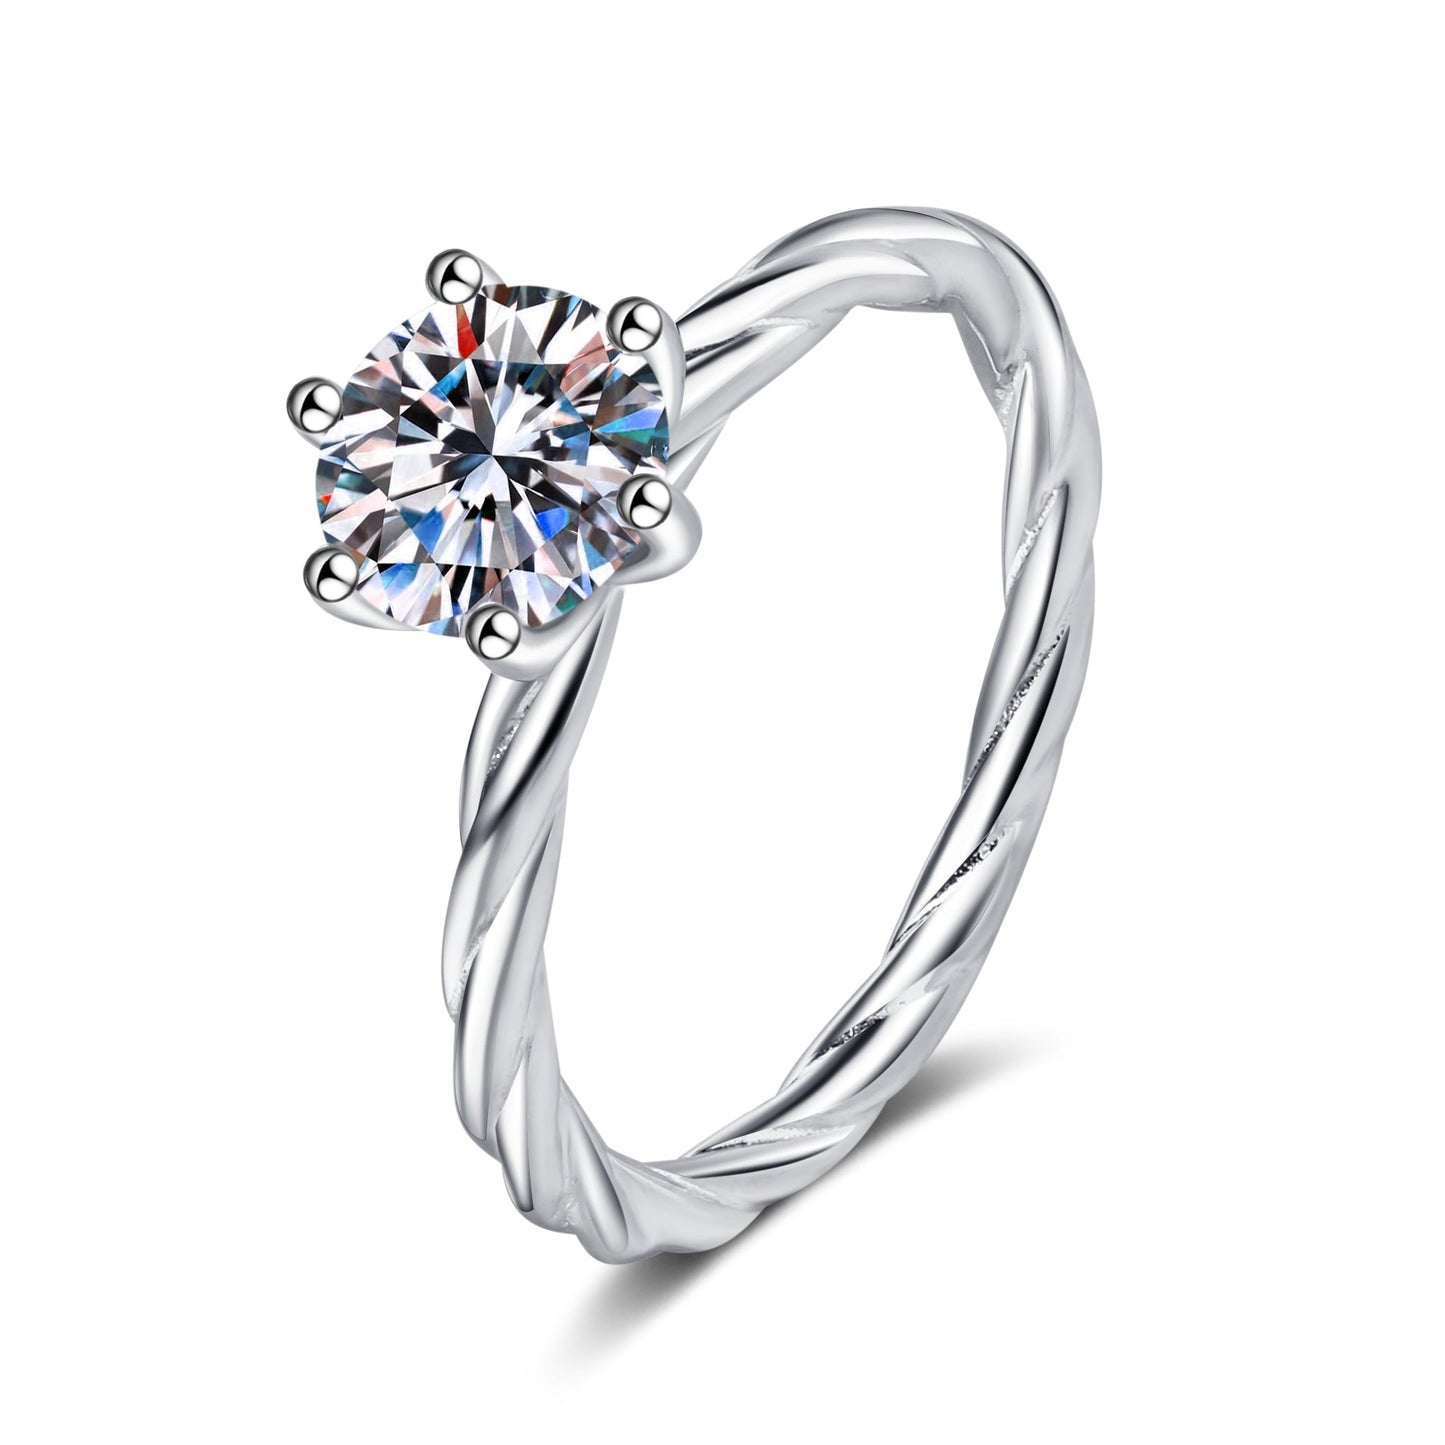 1 CT MOISSANITE Diamond Engagement Solitaire Ring, 925 Silver, Elegant Wedding Ring, the twist, Platinum Plated, Passes Diamond Tester az176 Xaxe.com